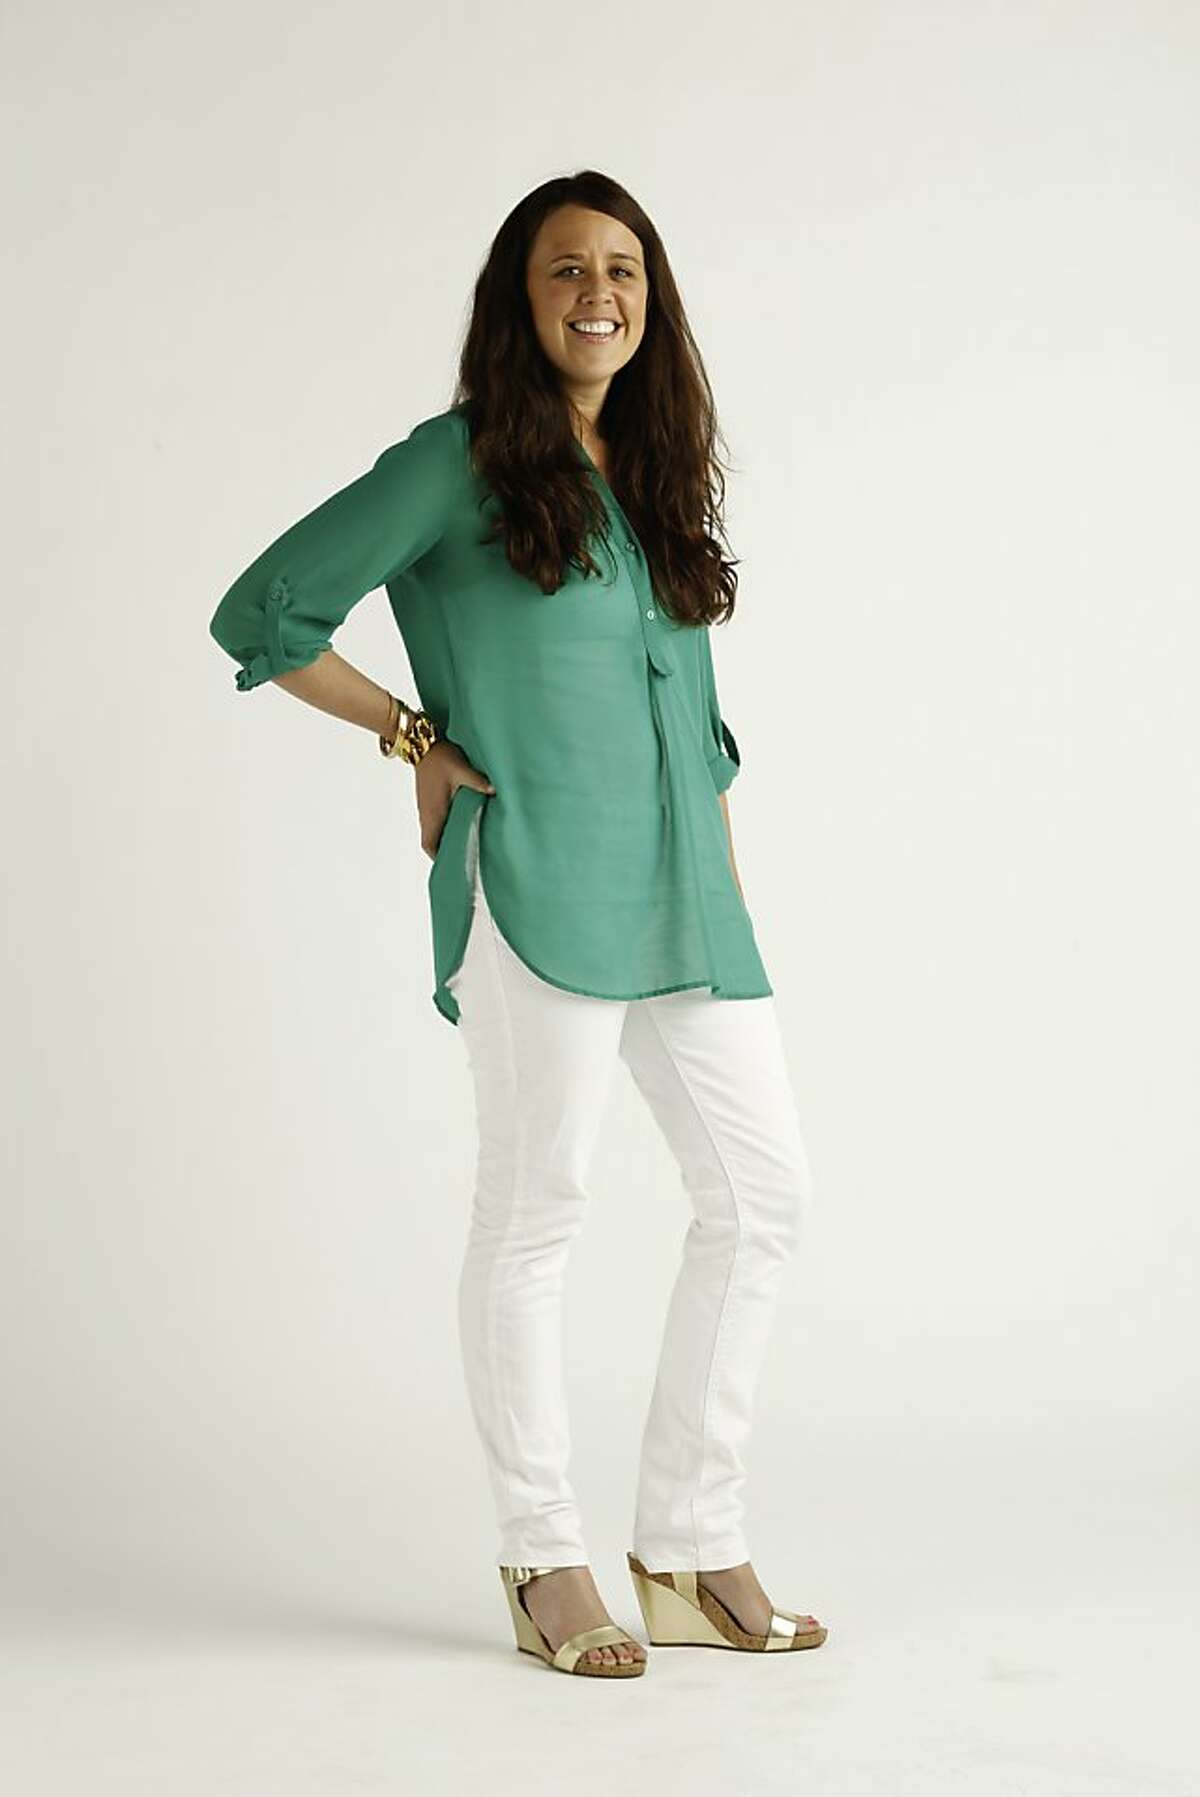 Melissa Winn, interior designer as seen in San Francisco, California on Wednesday, August 15, 2012.